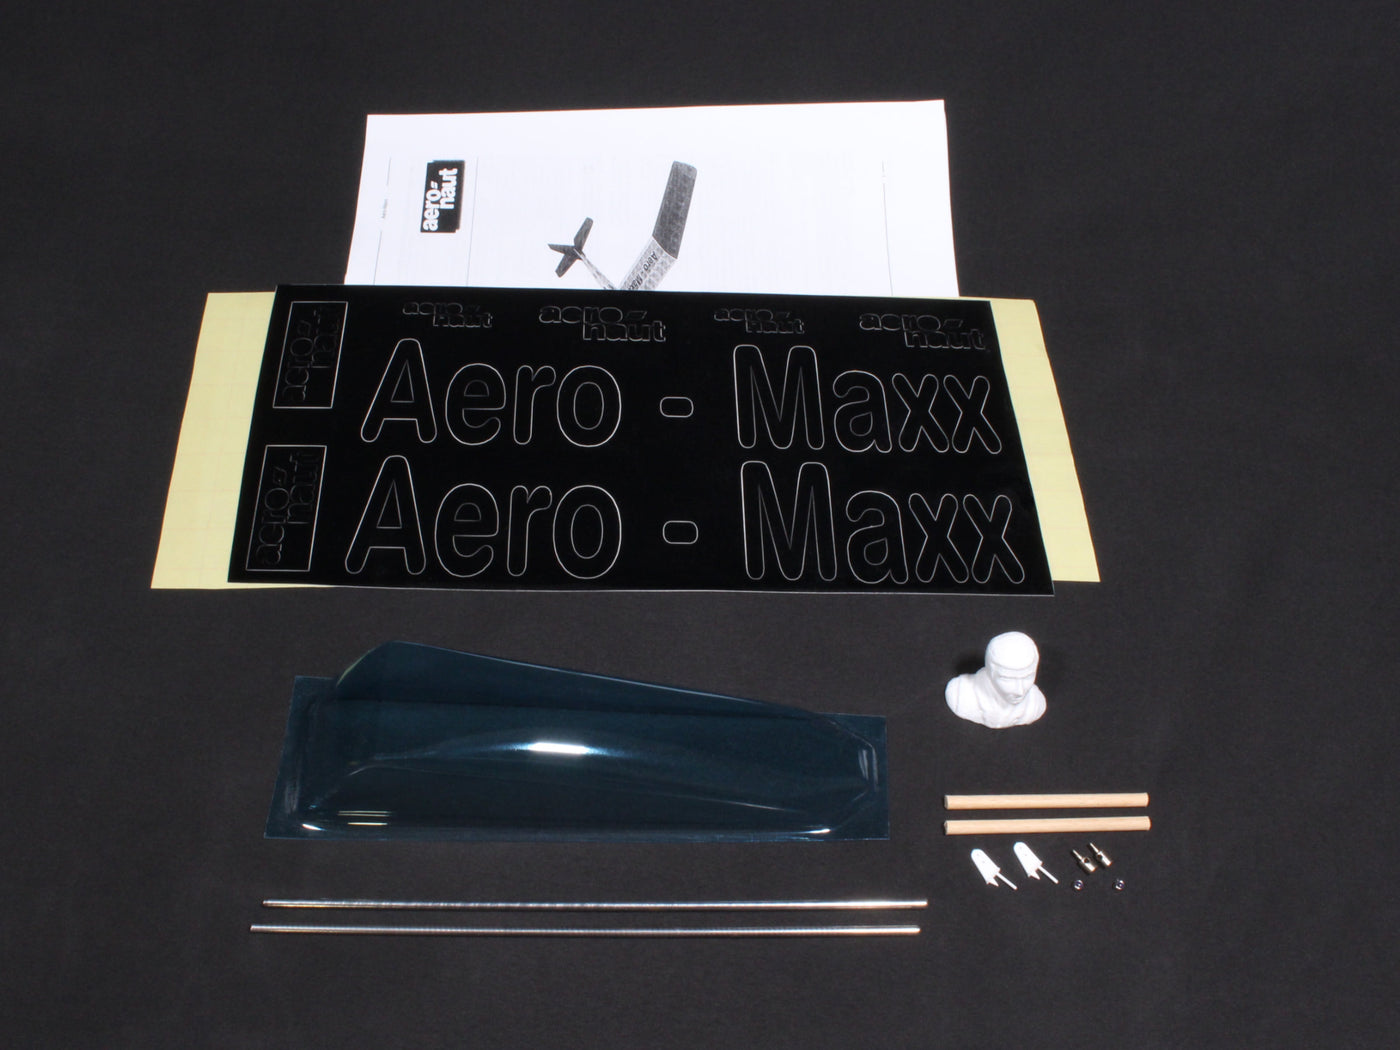 The Aero-Maxx 1.8 meter Electric Glider by Aero-naut